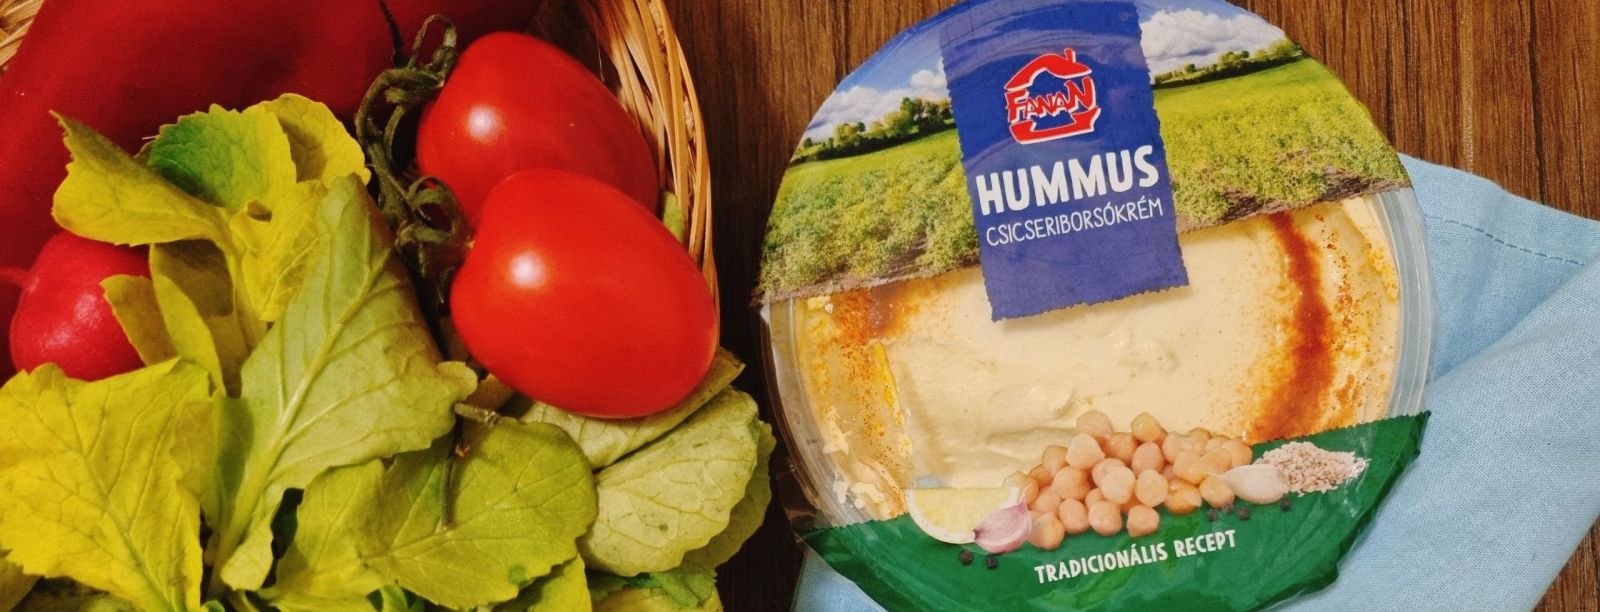 Fanan Natur Hummus